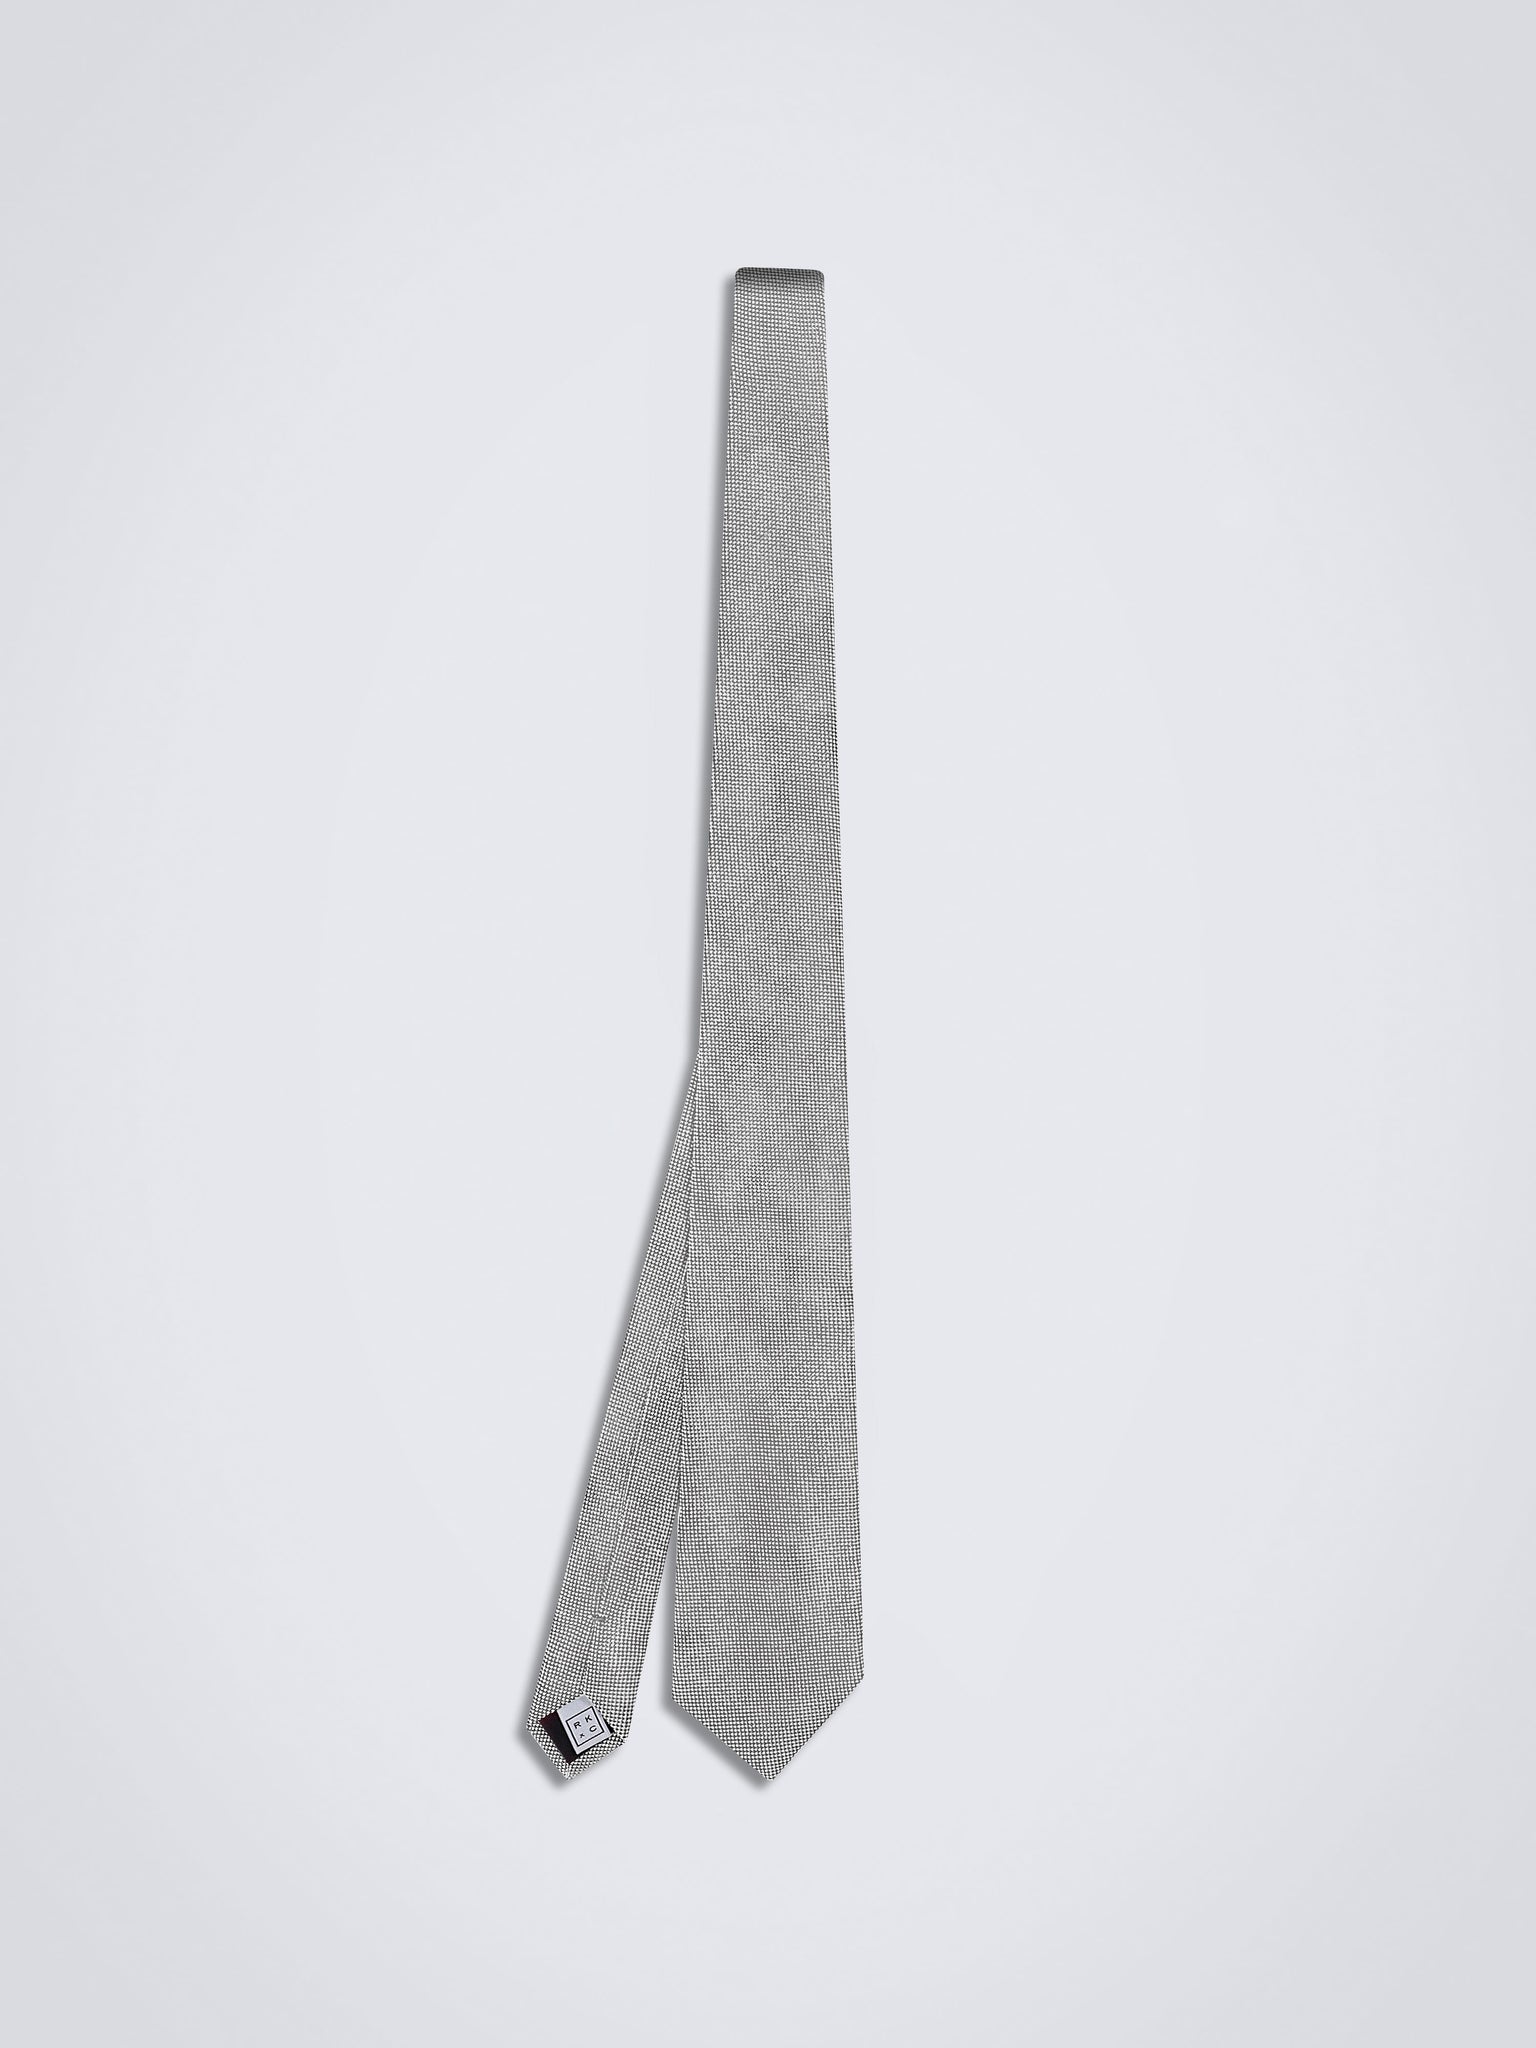 Dirty Martini - Necktie